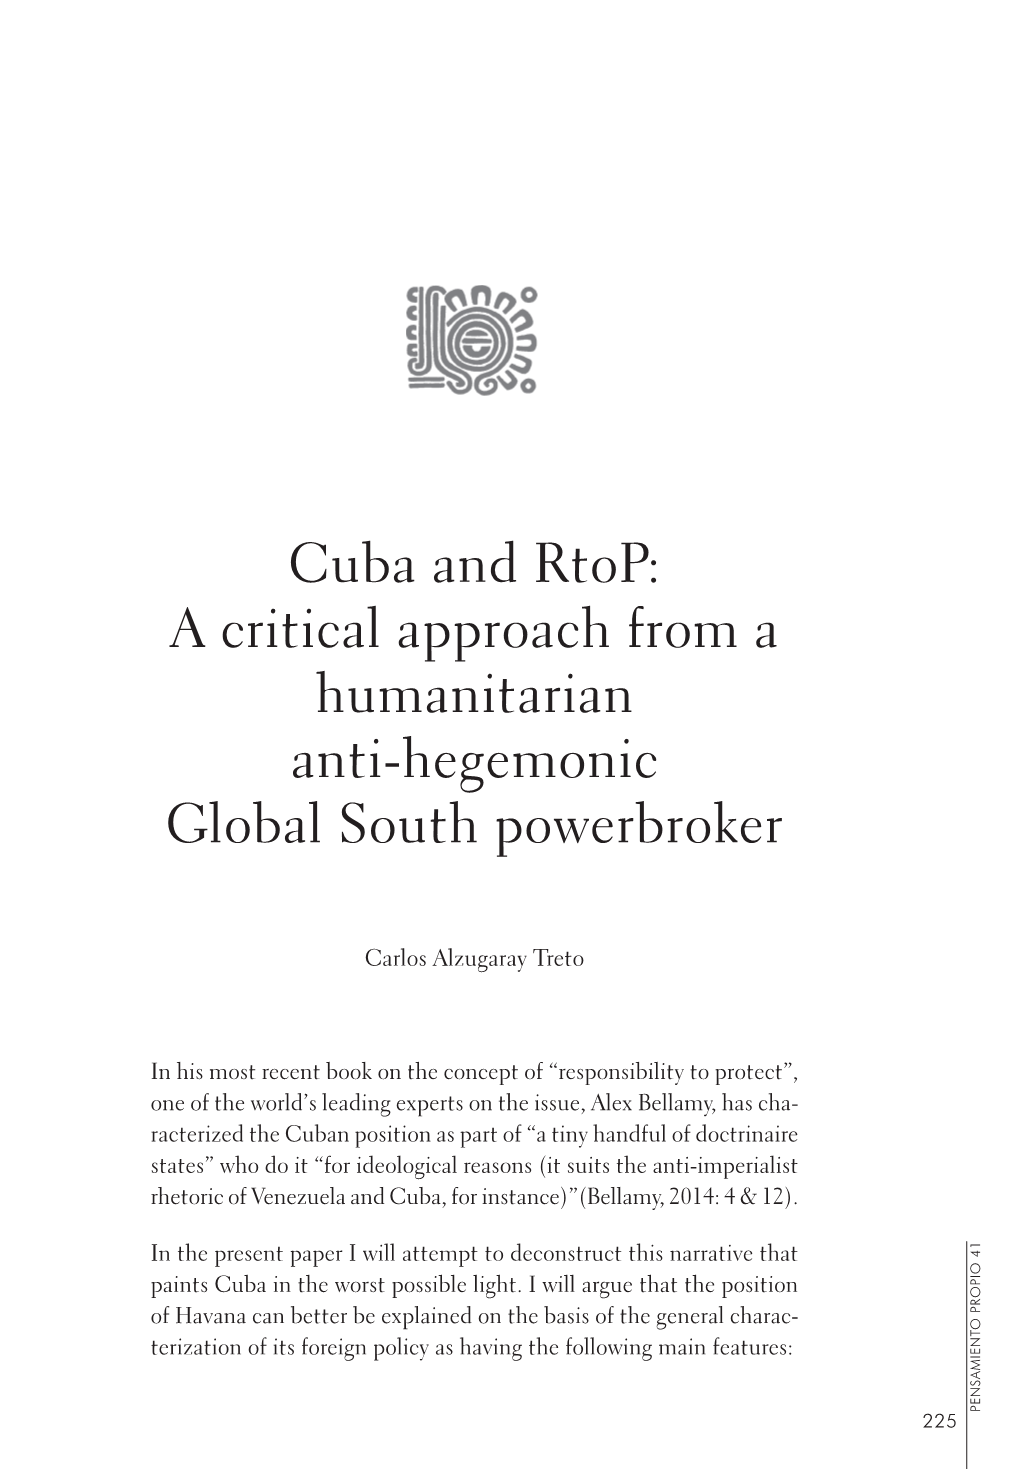 Cuba and Rtop: a Critical Approach from a Humanitarian Anti-Hegemonic Global South Powerbroker